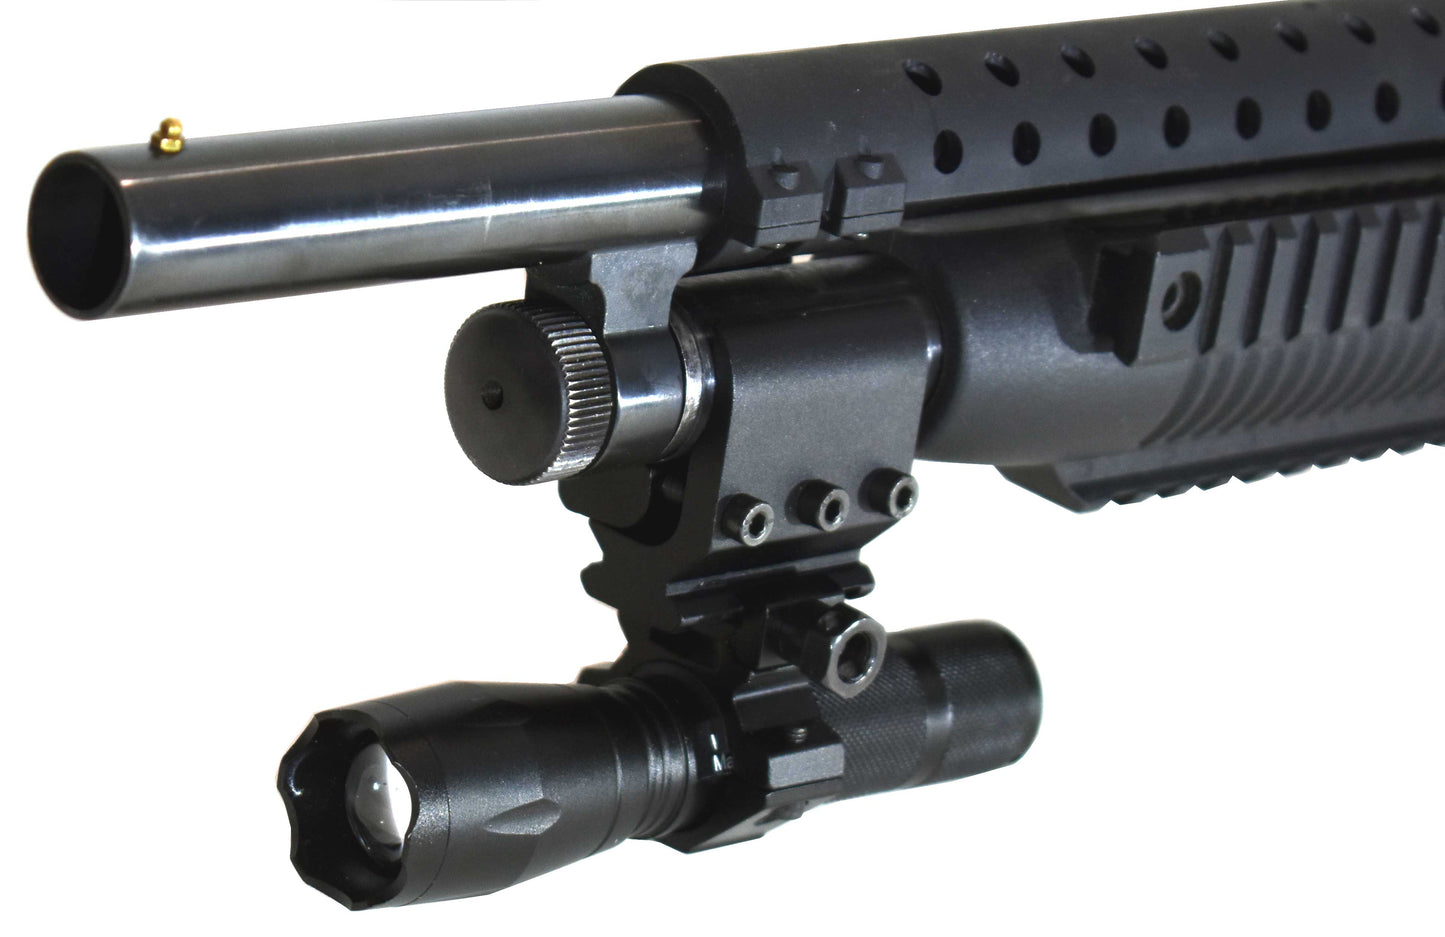 Mossberg 590 12 gauge pump picatinny base mount hunting tactical home defense.